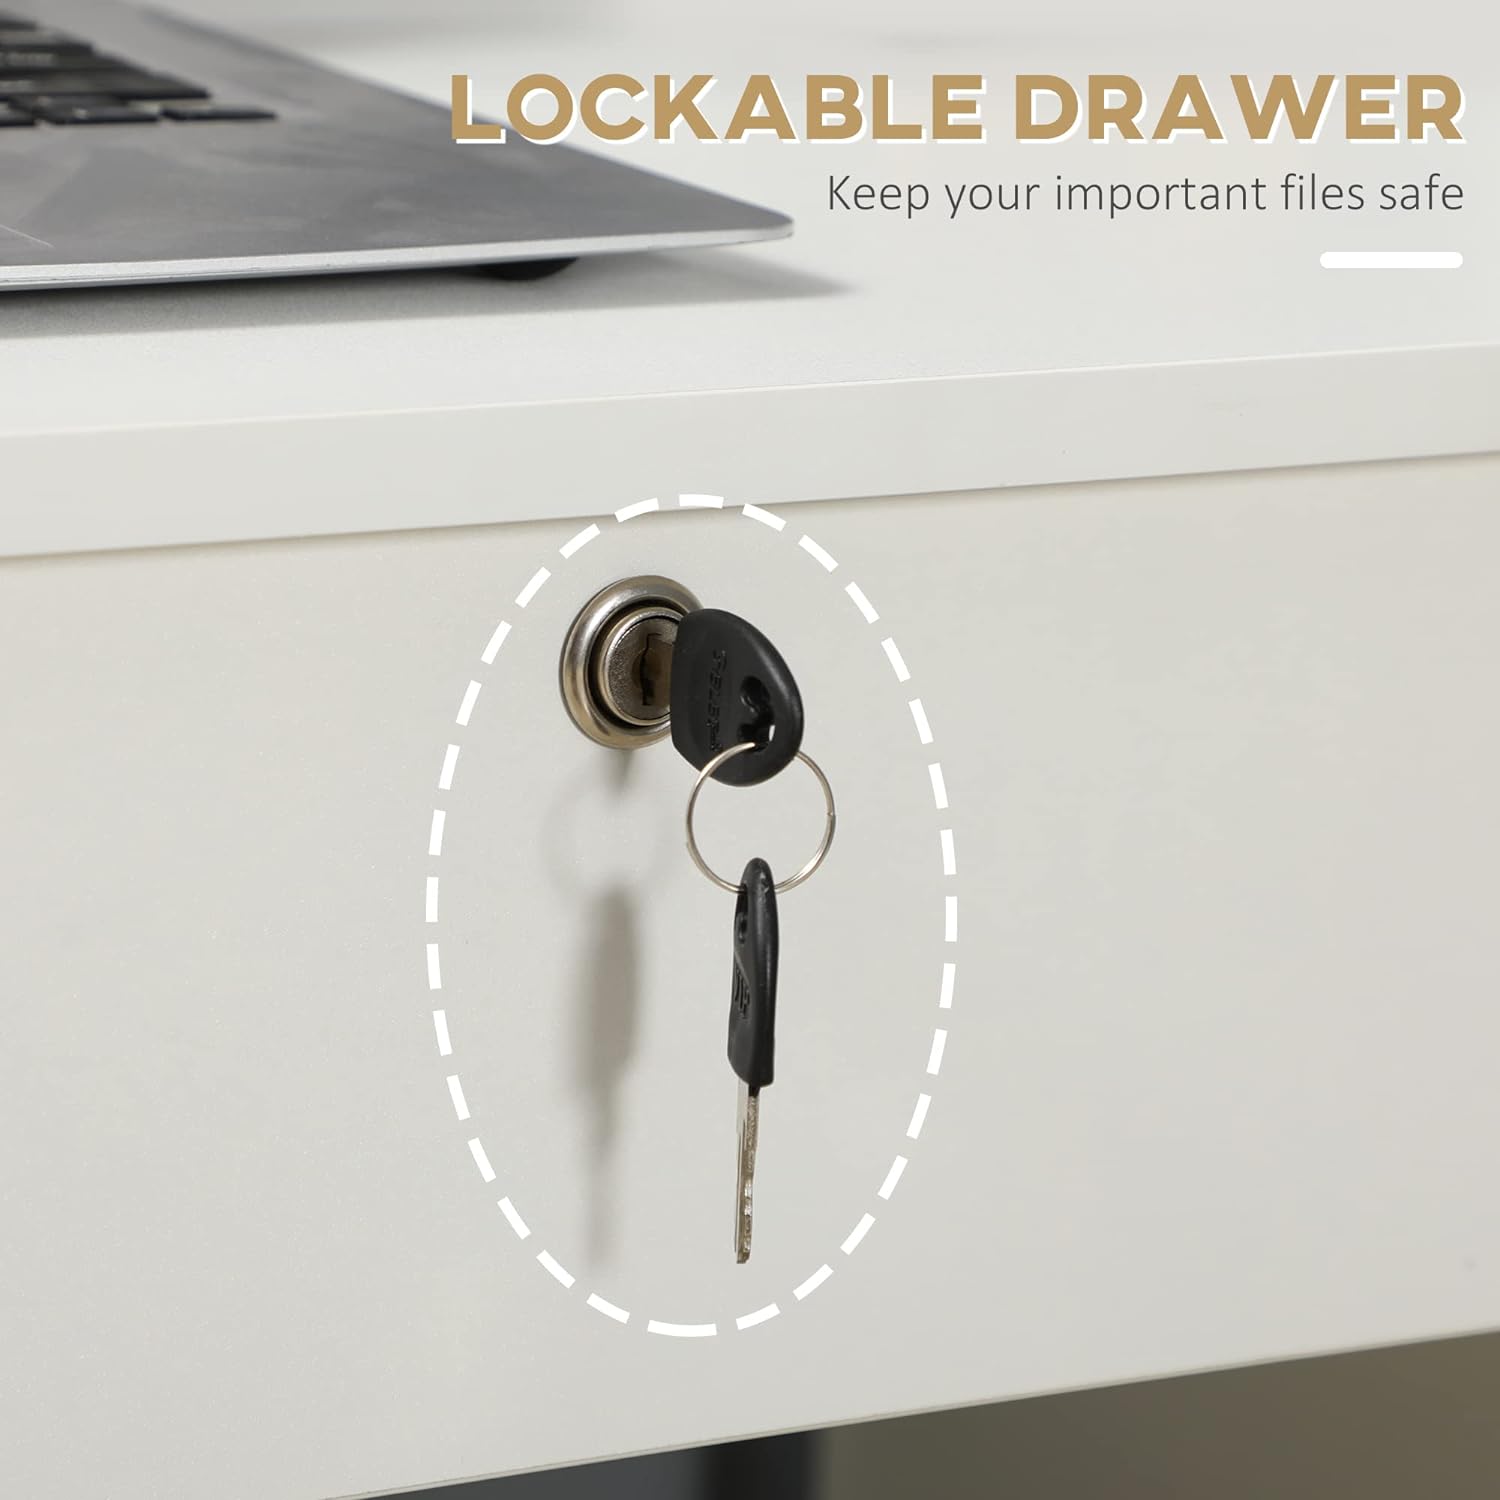 ProperAV Extra Home Office Desk with Lockable Drawer & Storage Shelf - maplin.co.uk